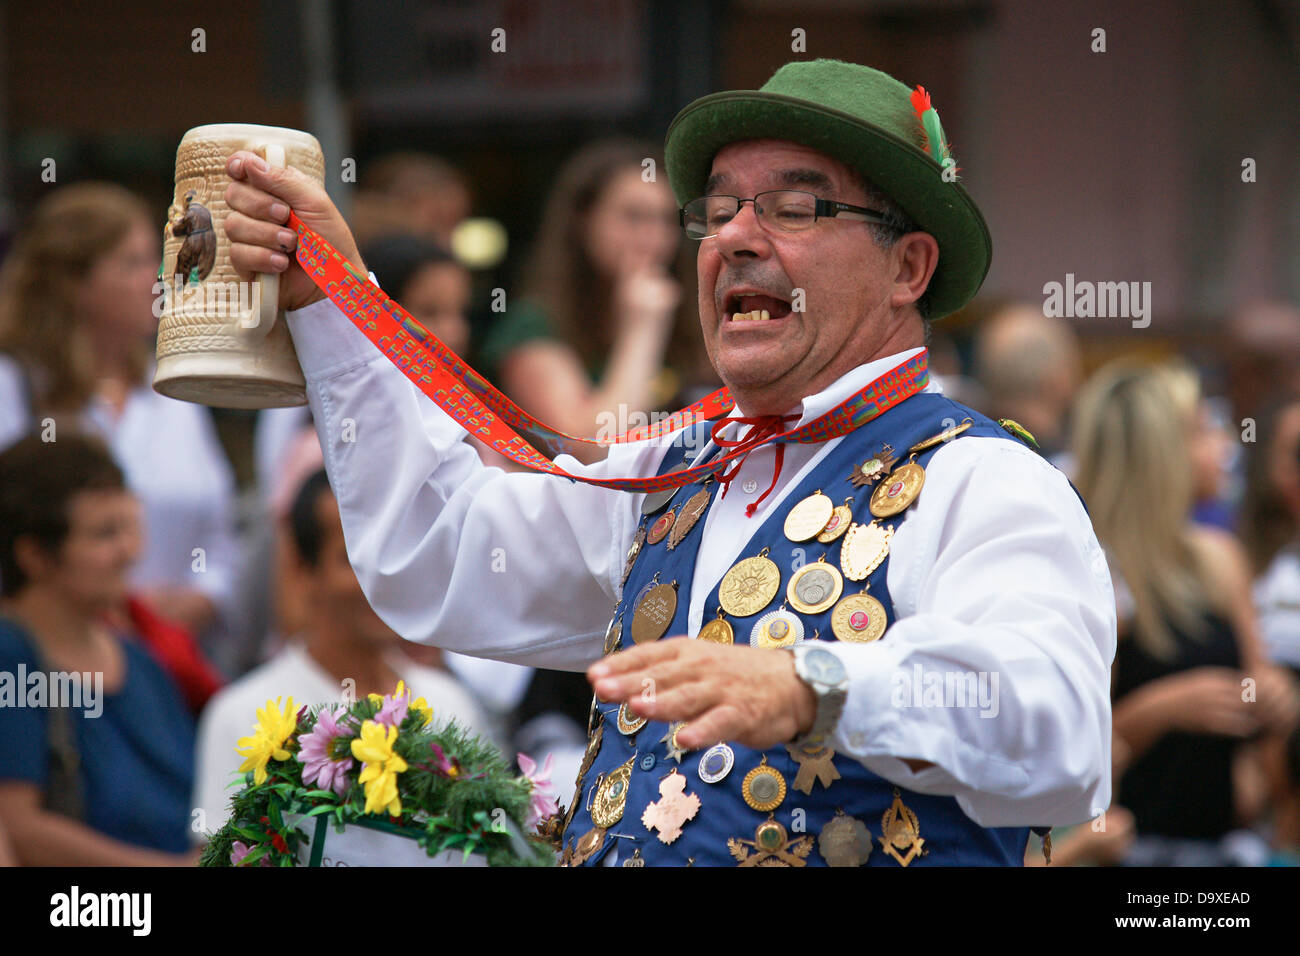 Elder bavarian style dressed member of a gun shooting club wearing his medal vest having a good time Stock Photo